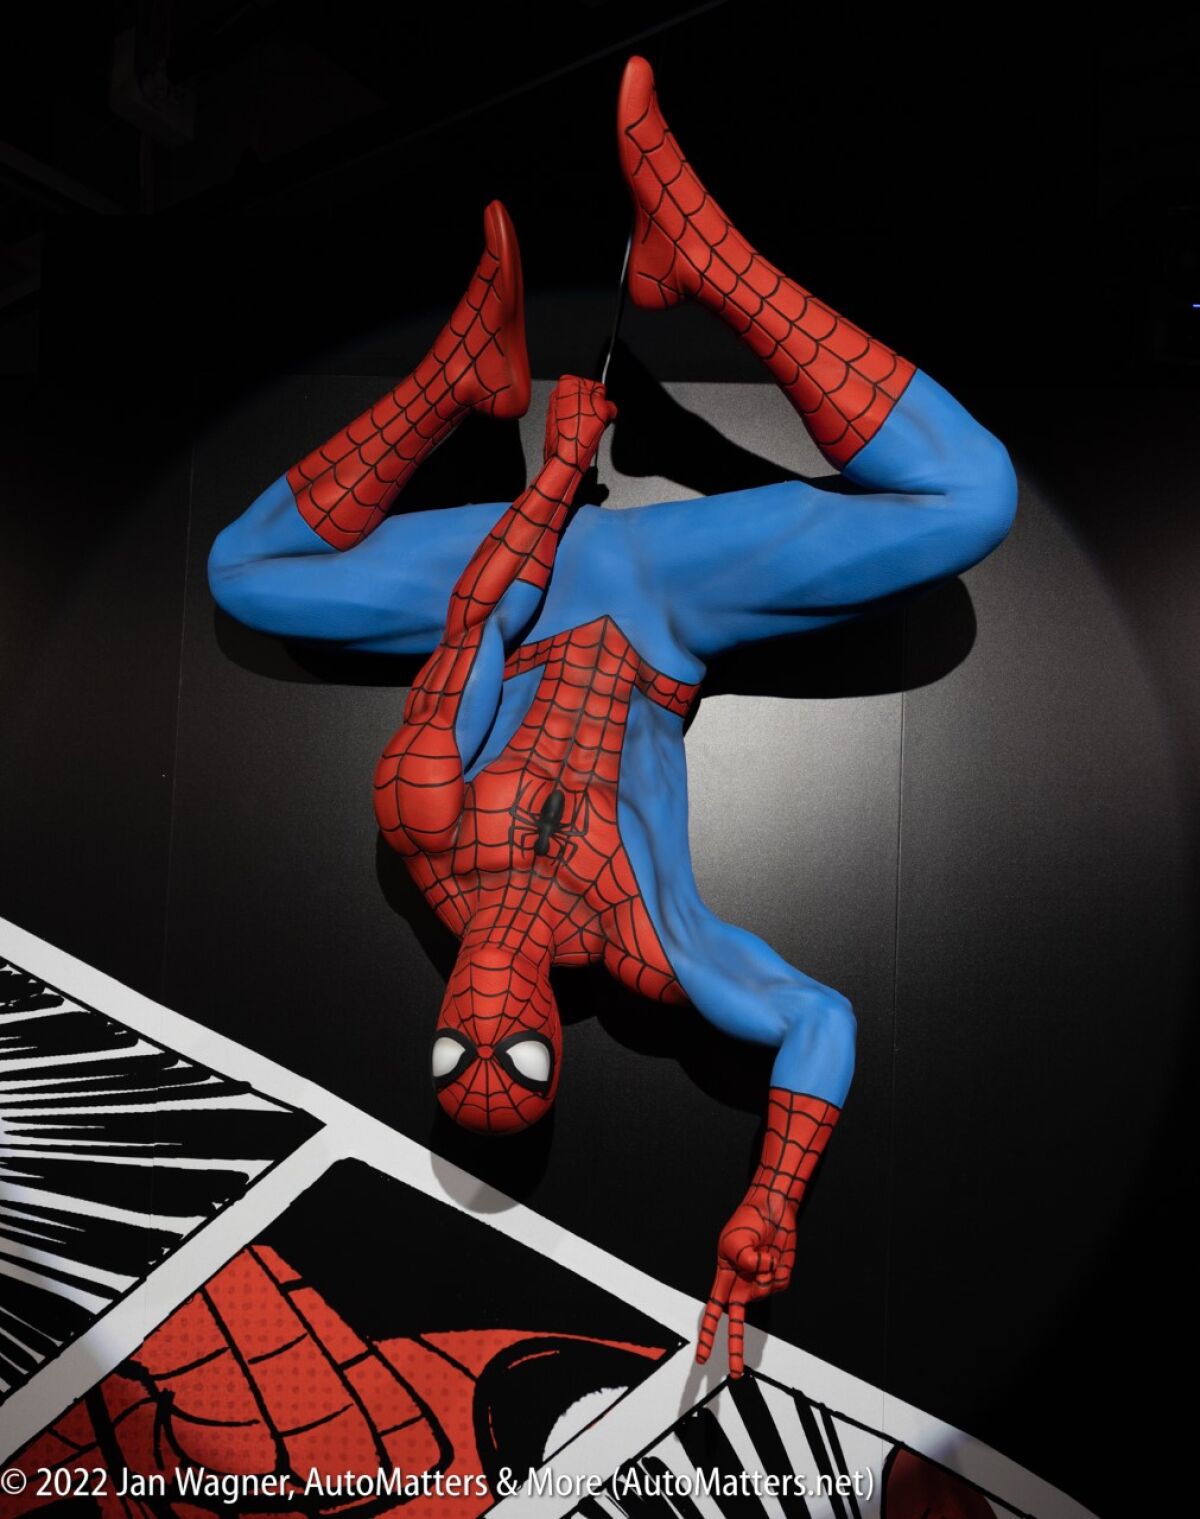 Your friendly neighborhood Spider-Man